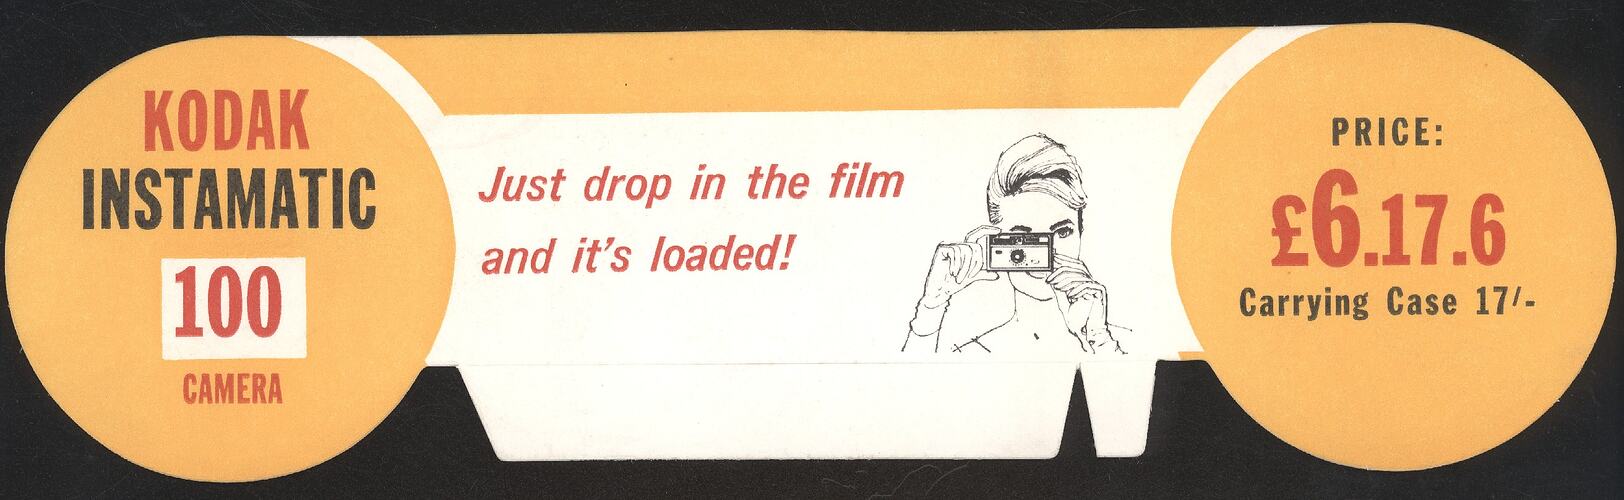 Price Ticket - Kodak Australasia Pty Ltd, 'Kodak Instamatic 100 Camera', 1963 - 1966